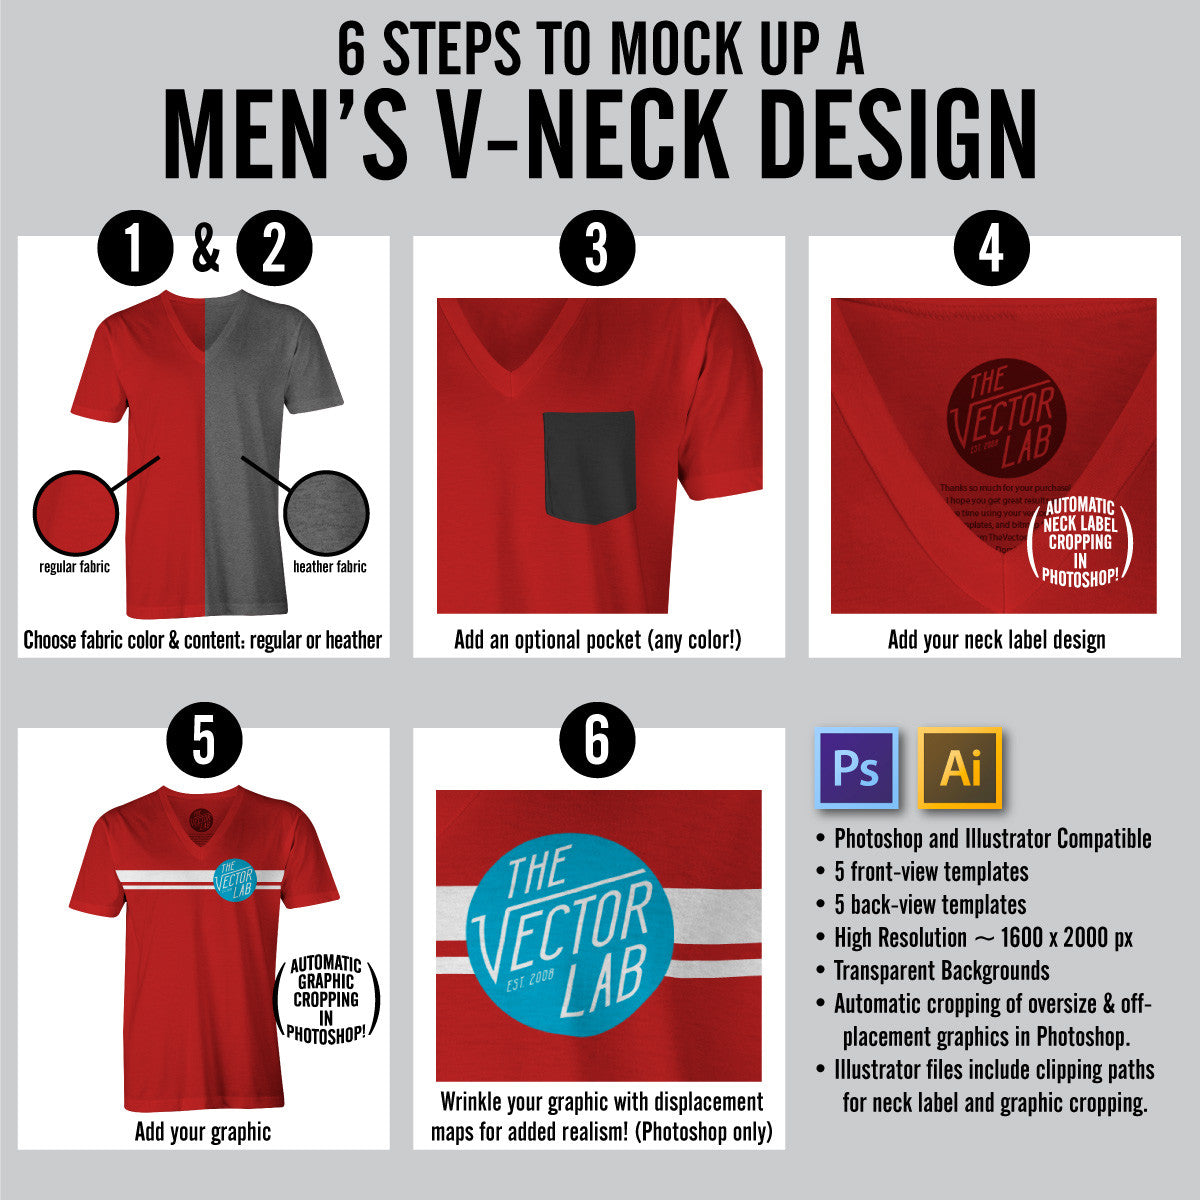 Download Men's V-Neck Mockup Templates - TheVectorLab